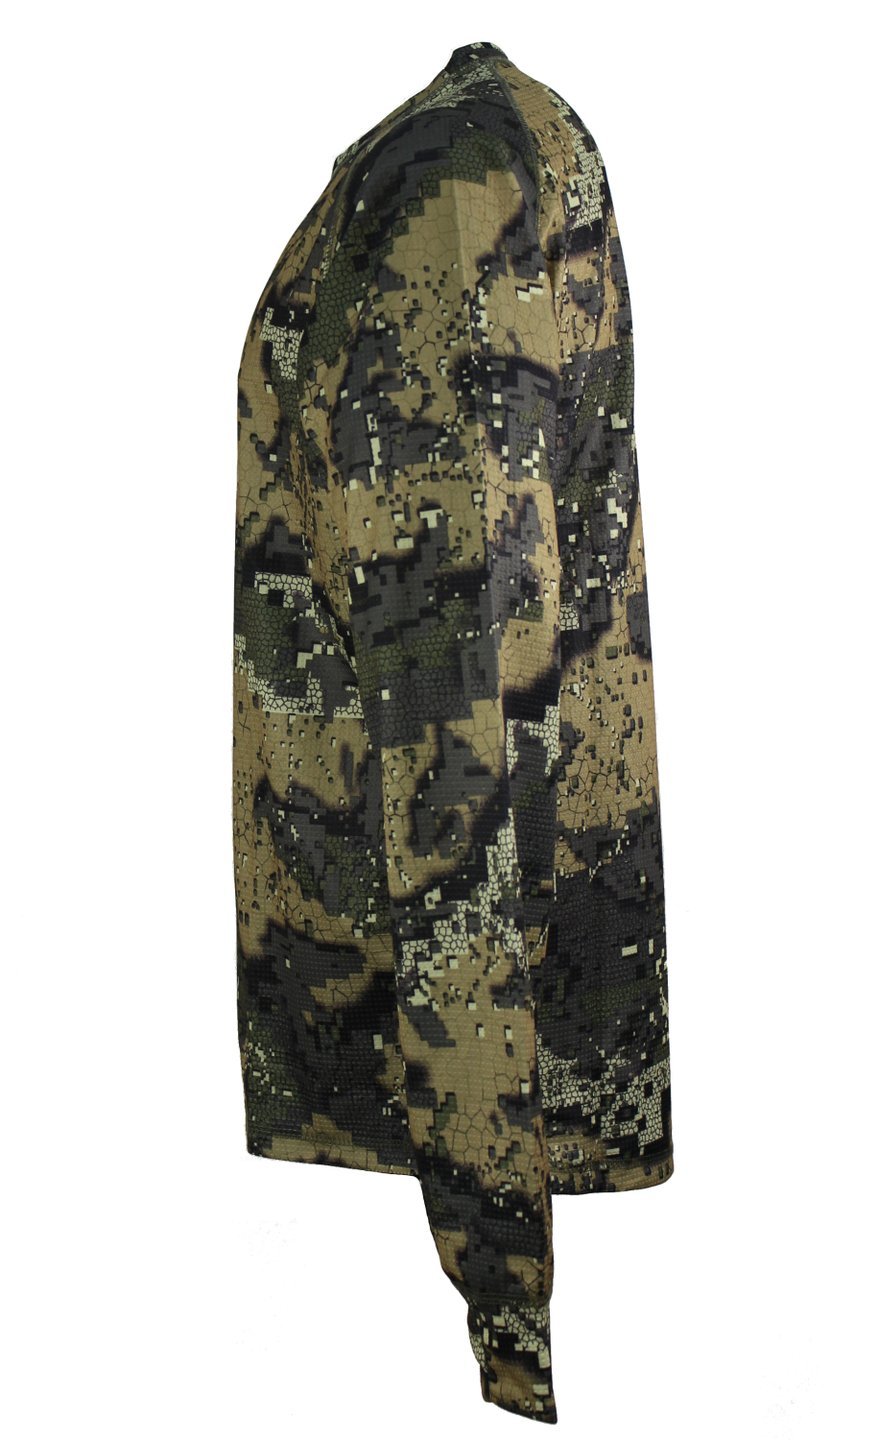 Джемпер охотничий  Remington Men's  Camouflage T-Shirt  APG Hunting Camo, цвет Optifade, р. M (RM1305-999)